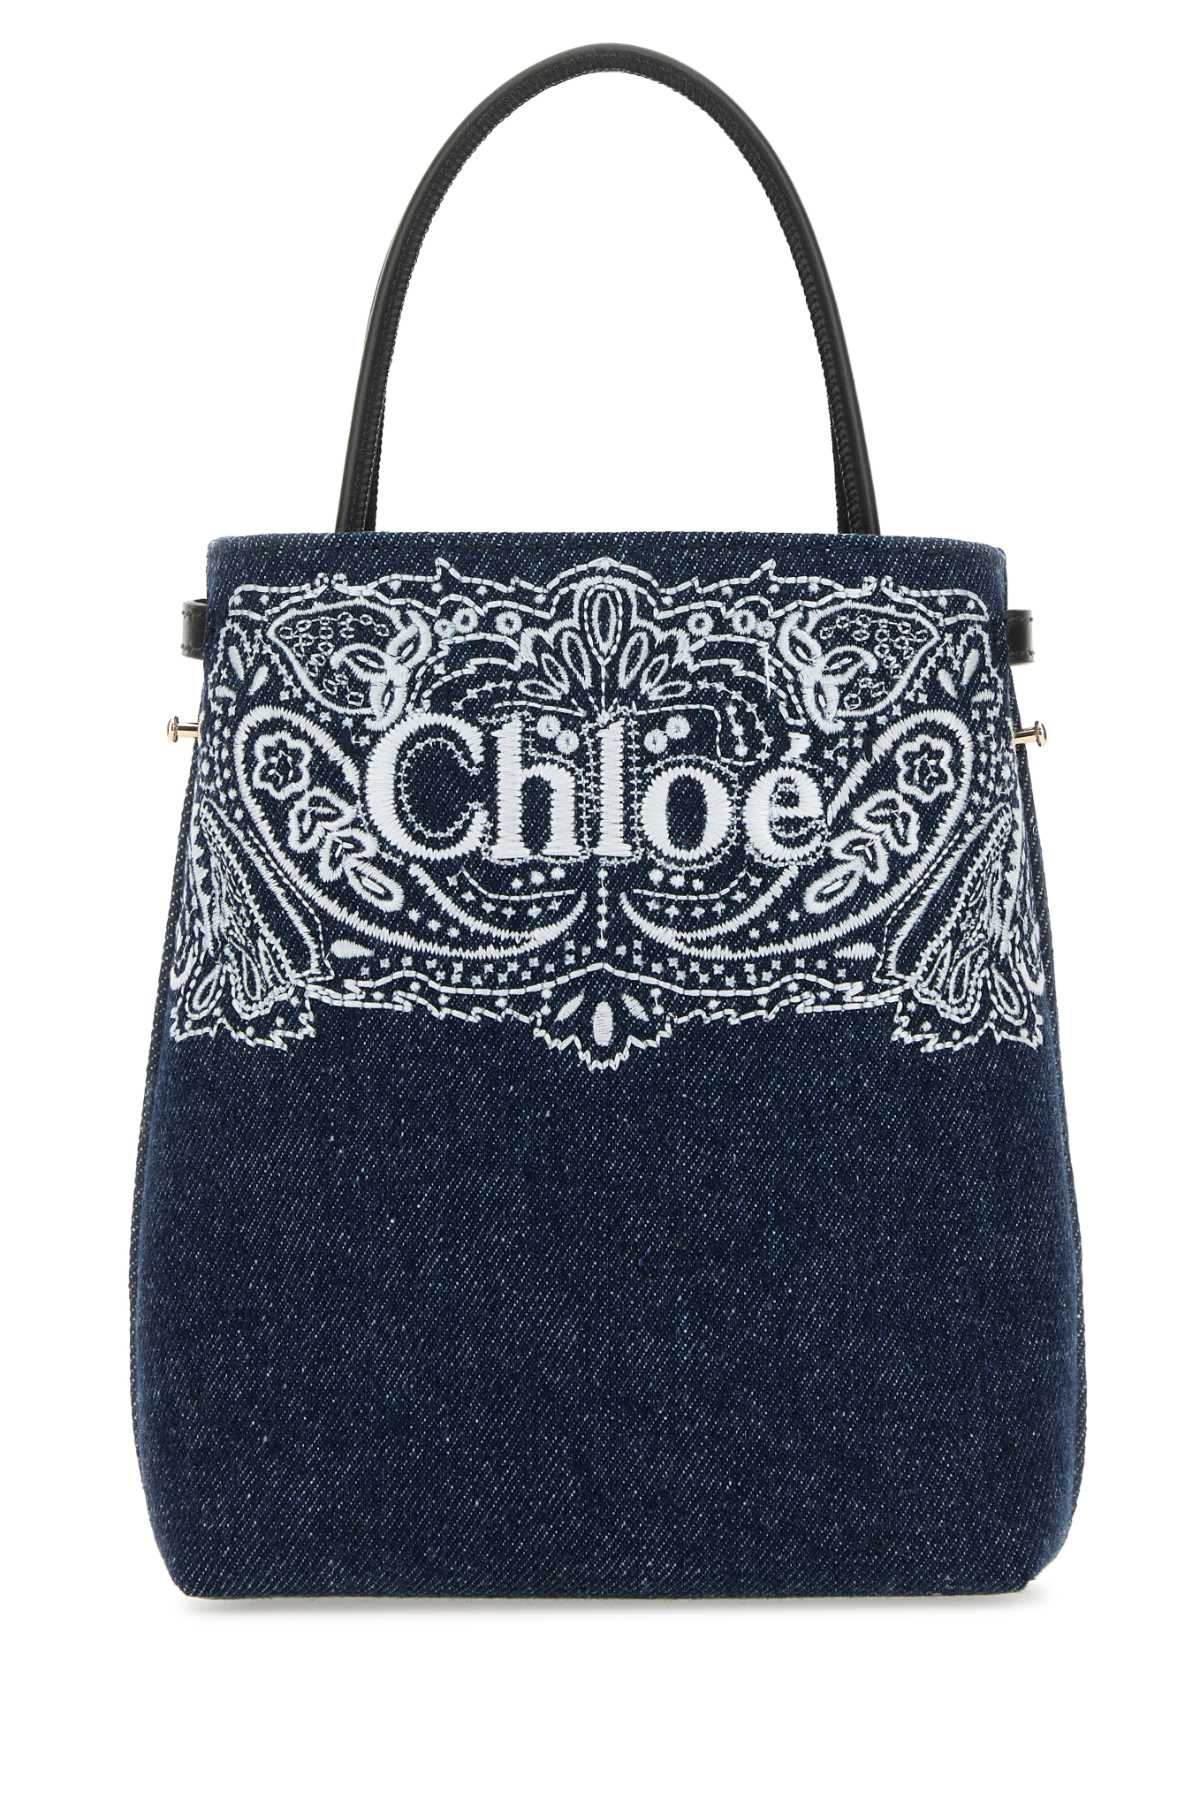 Chloé Denim Micro Sense Handbag